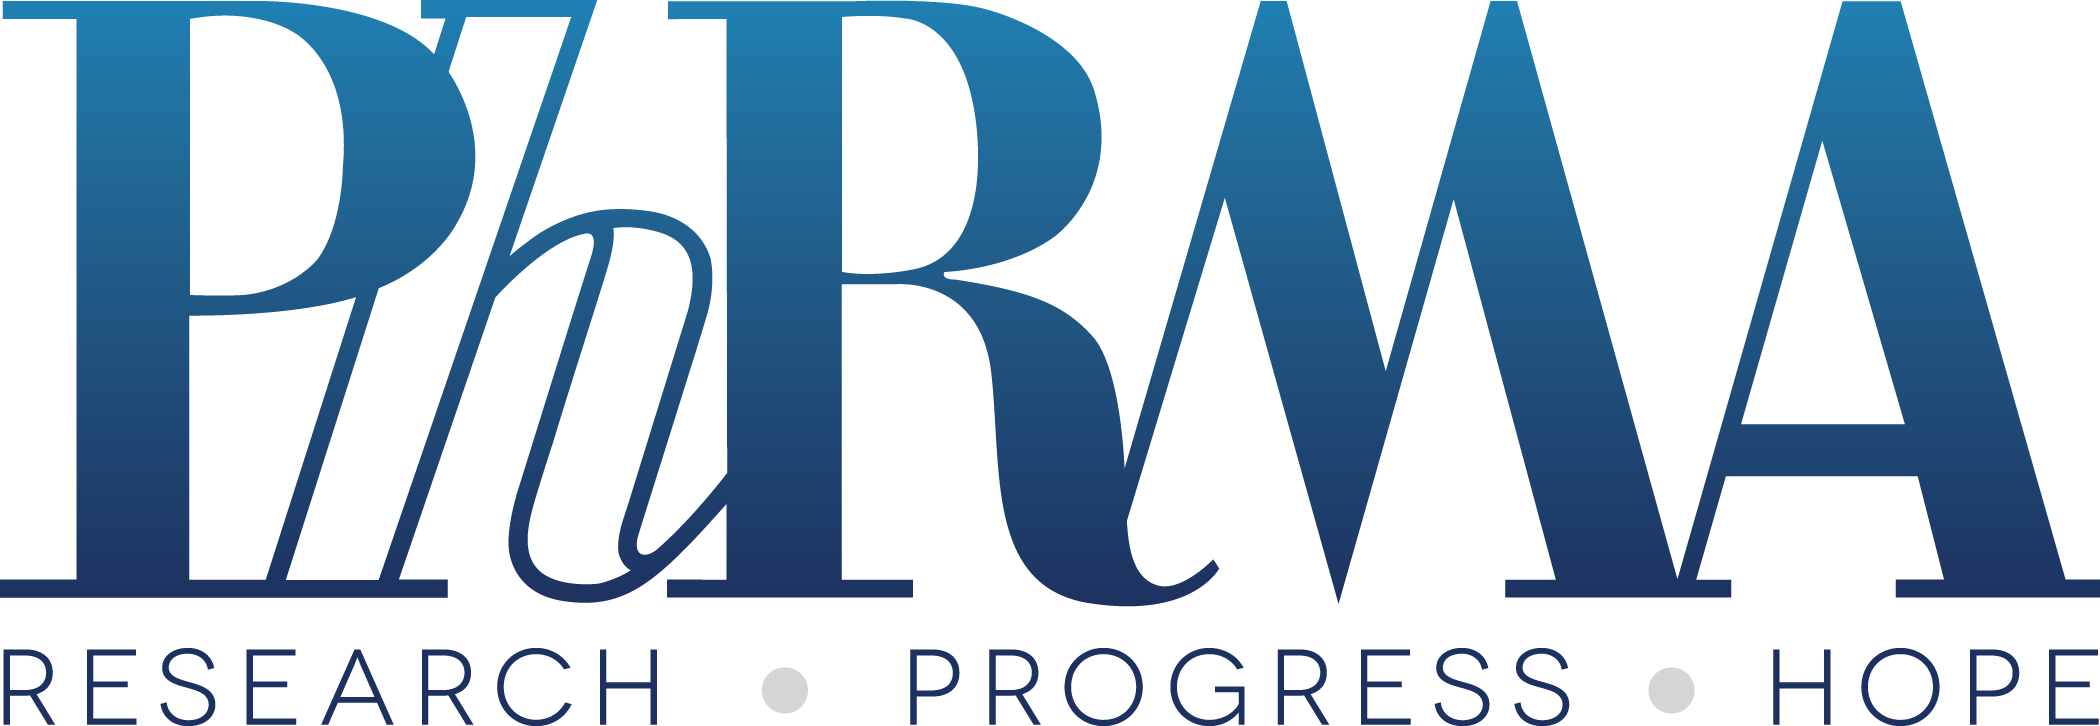 PhRMA Research Progress Hope